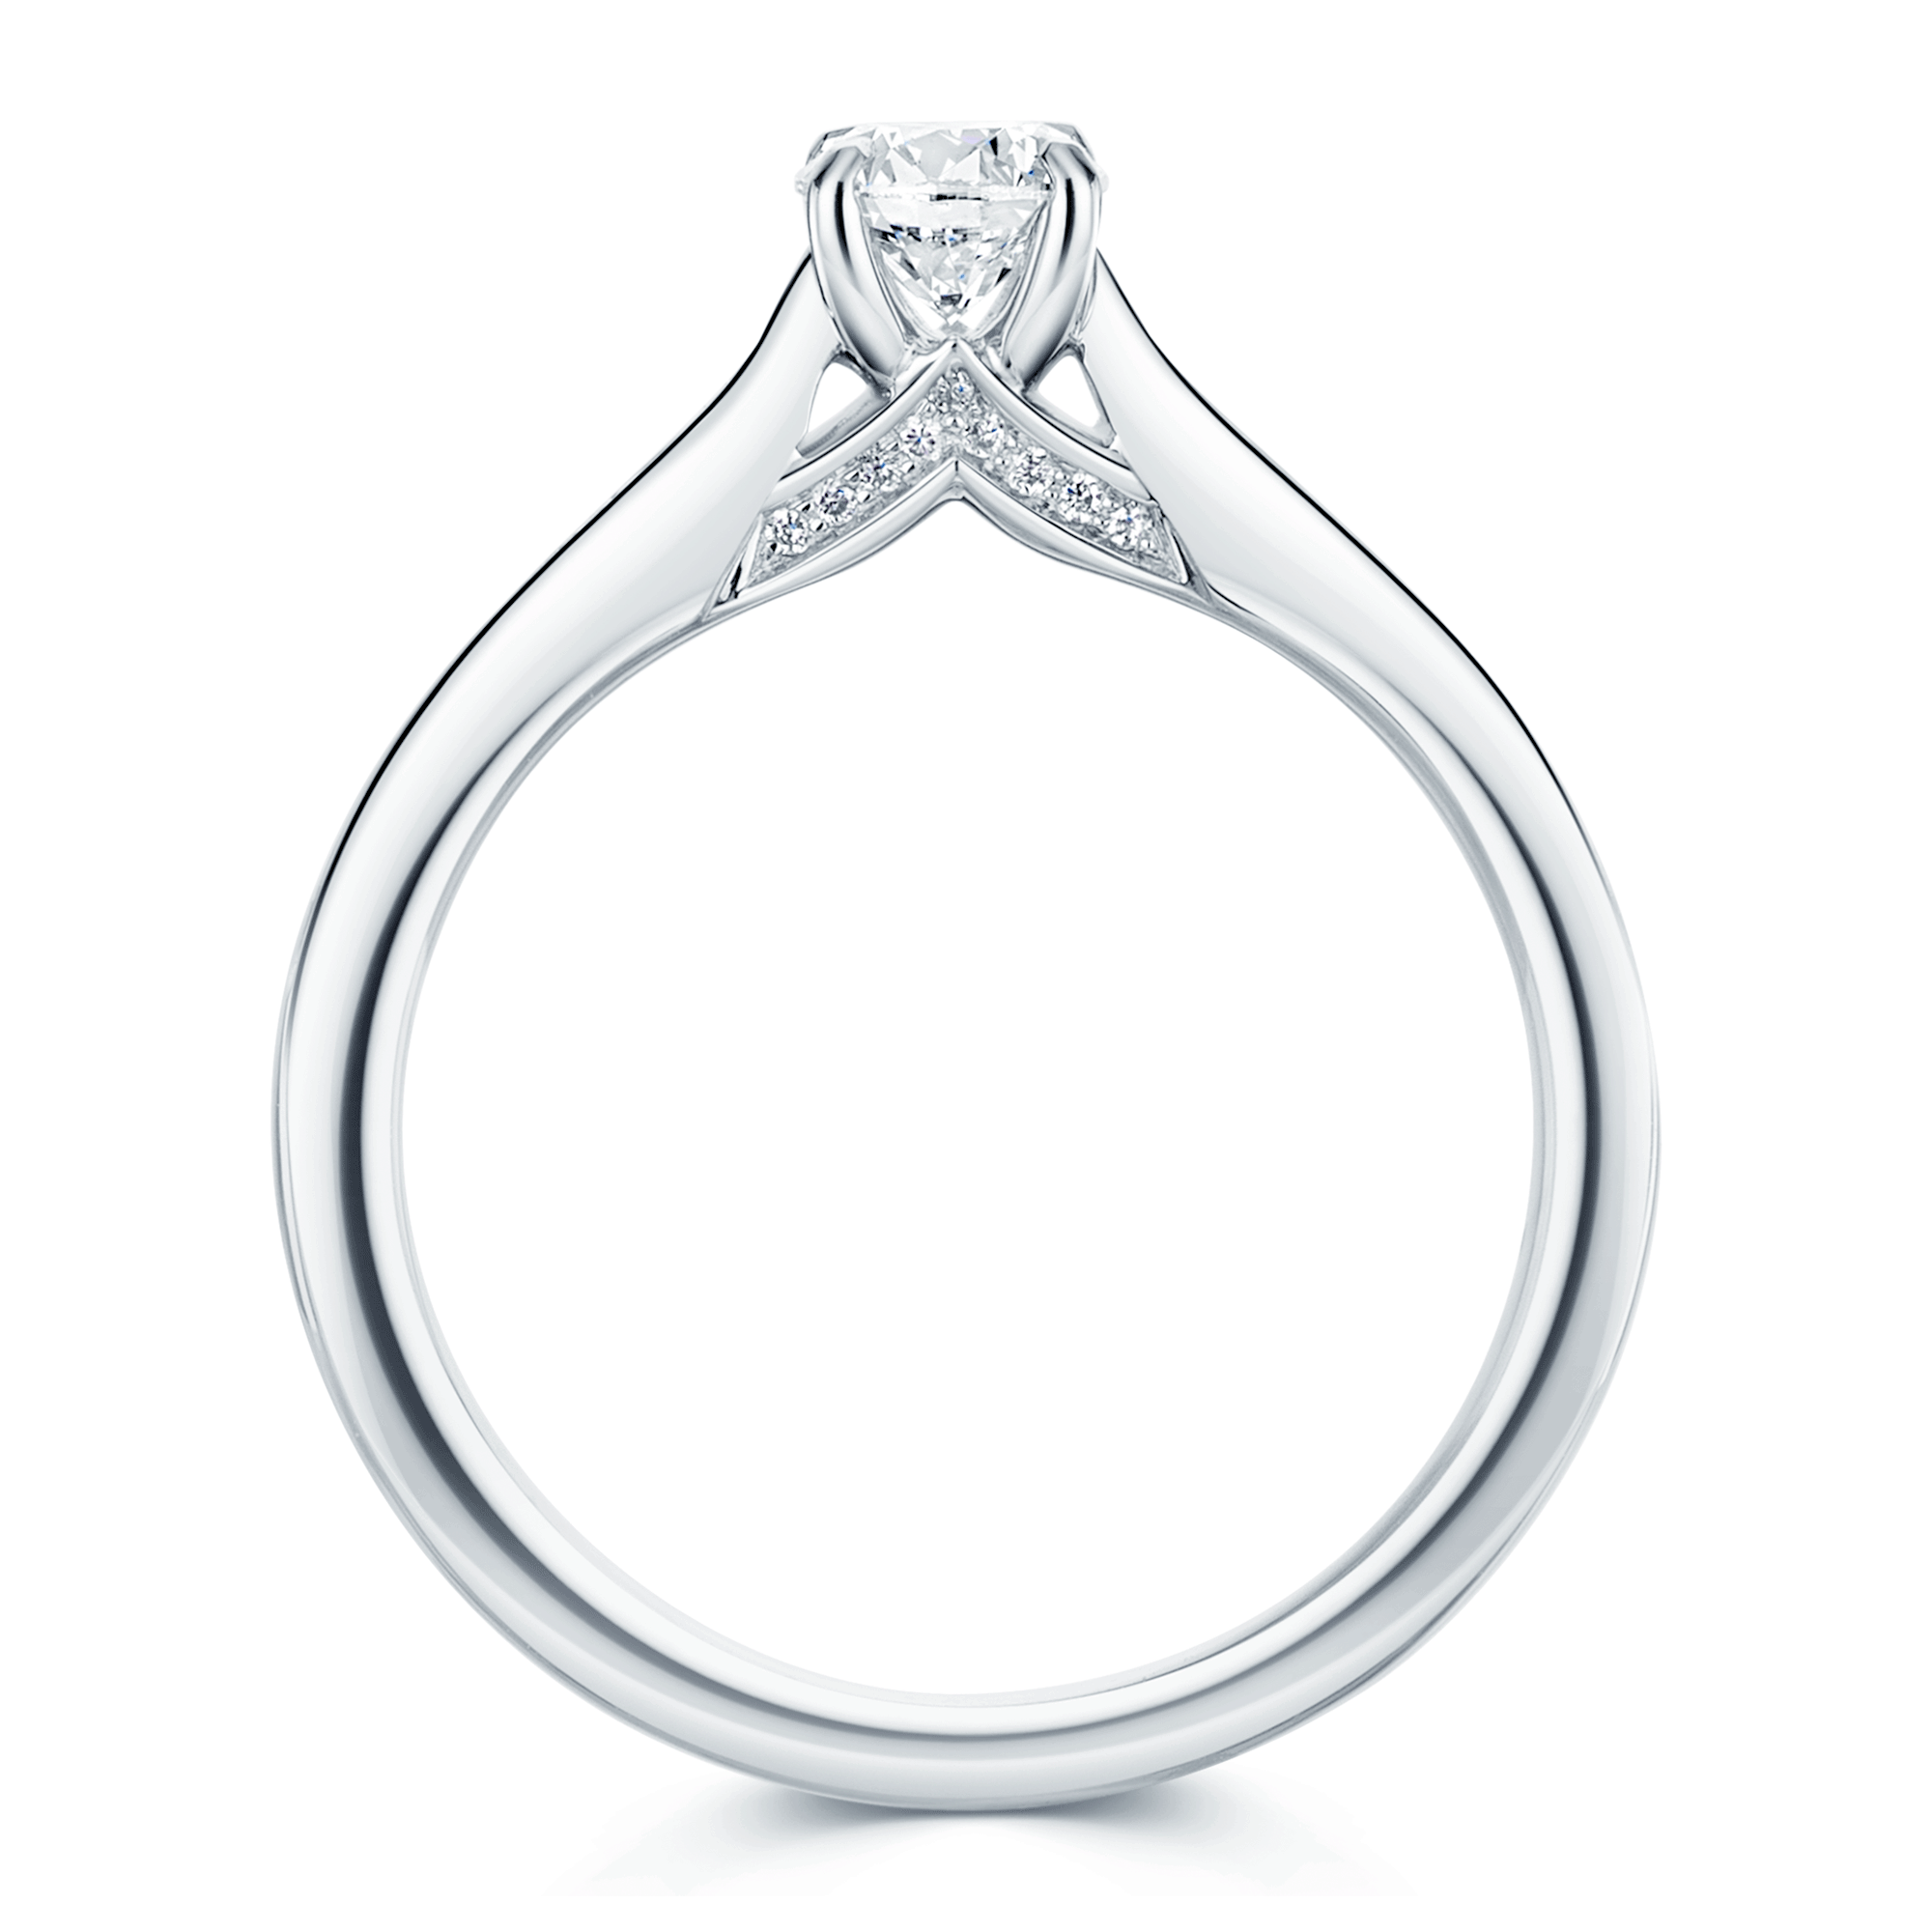 Platinum GIA Certificated Round Brilliant Cut Diamond Ring With Diamond Shoulders